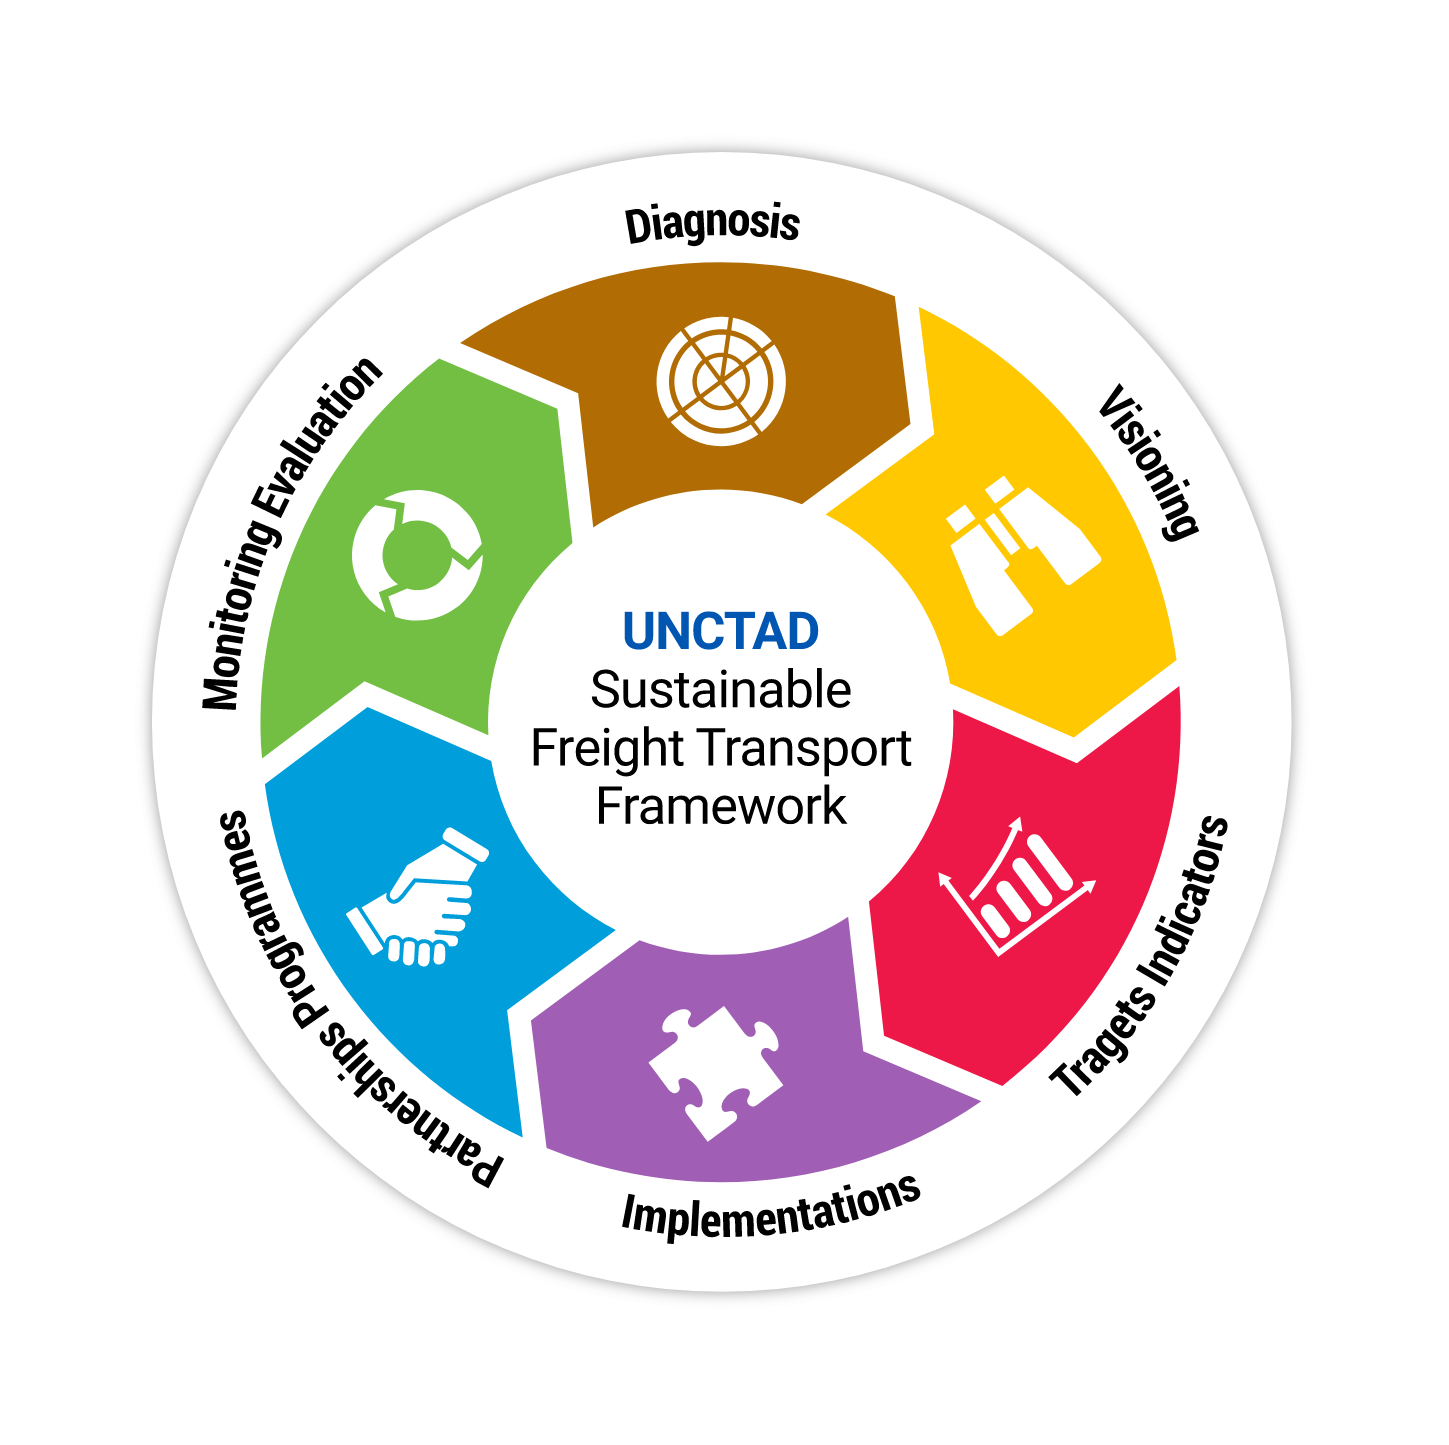 UNCTAD Sustainable Freight Transport Framework